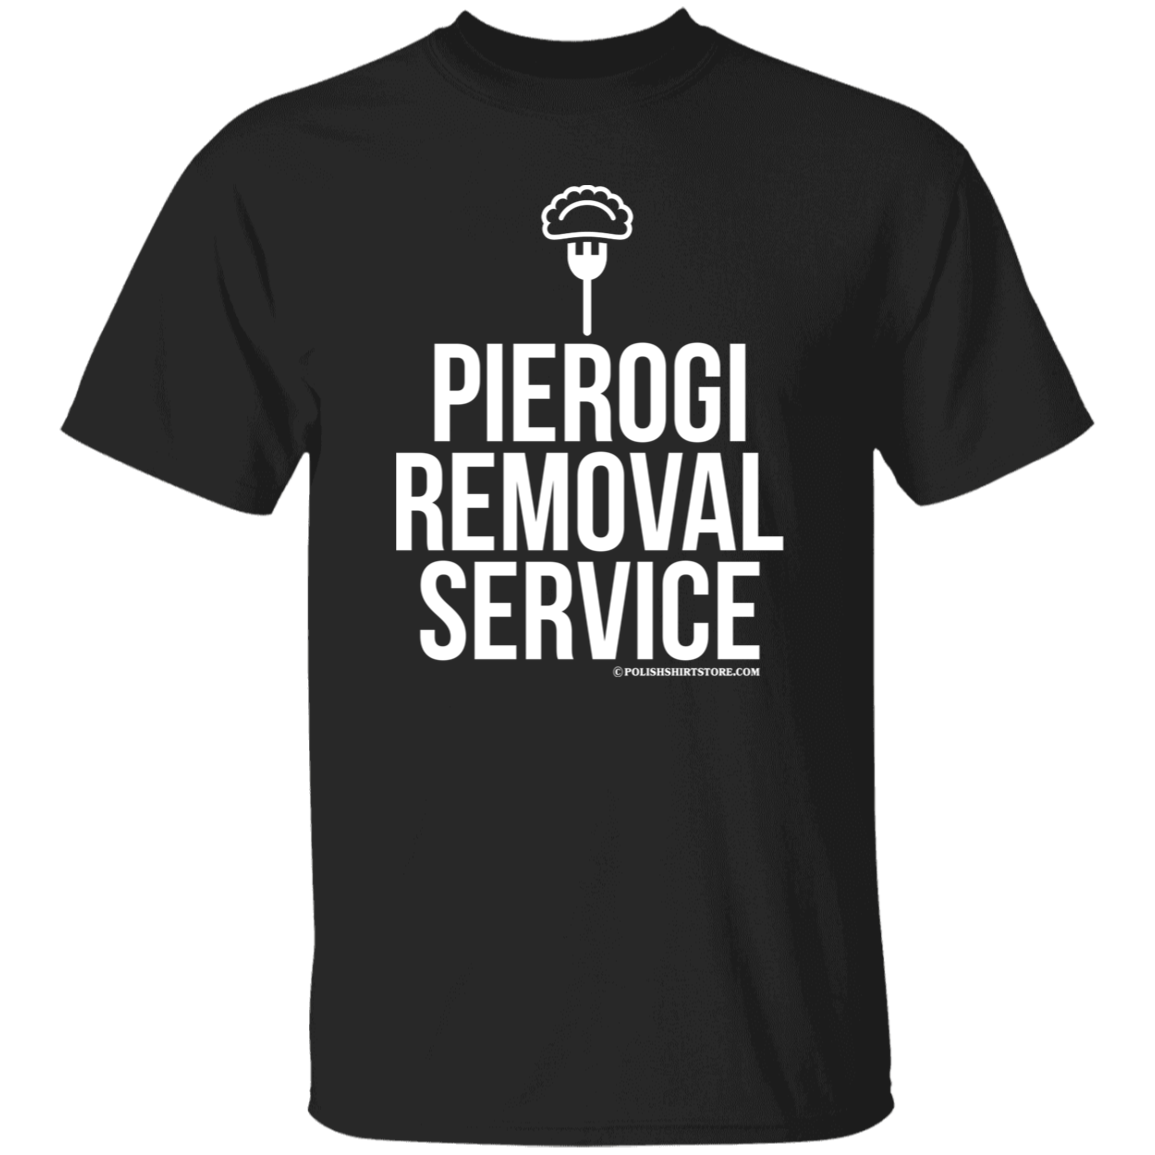 Pierogi Removal Service Apparel CustomCat G500 5.3 oz. T-Shirt Black S